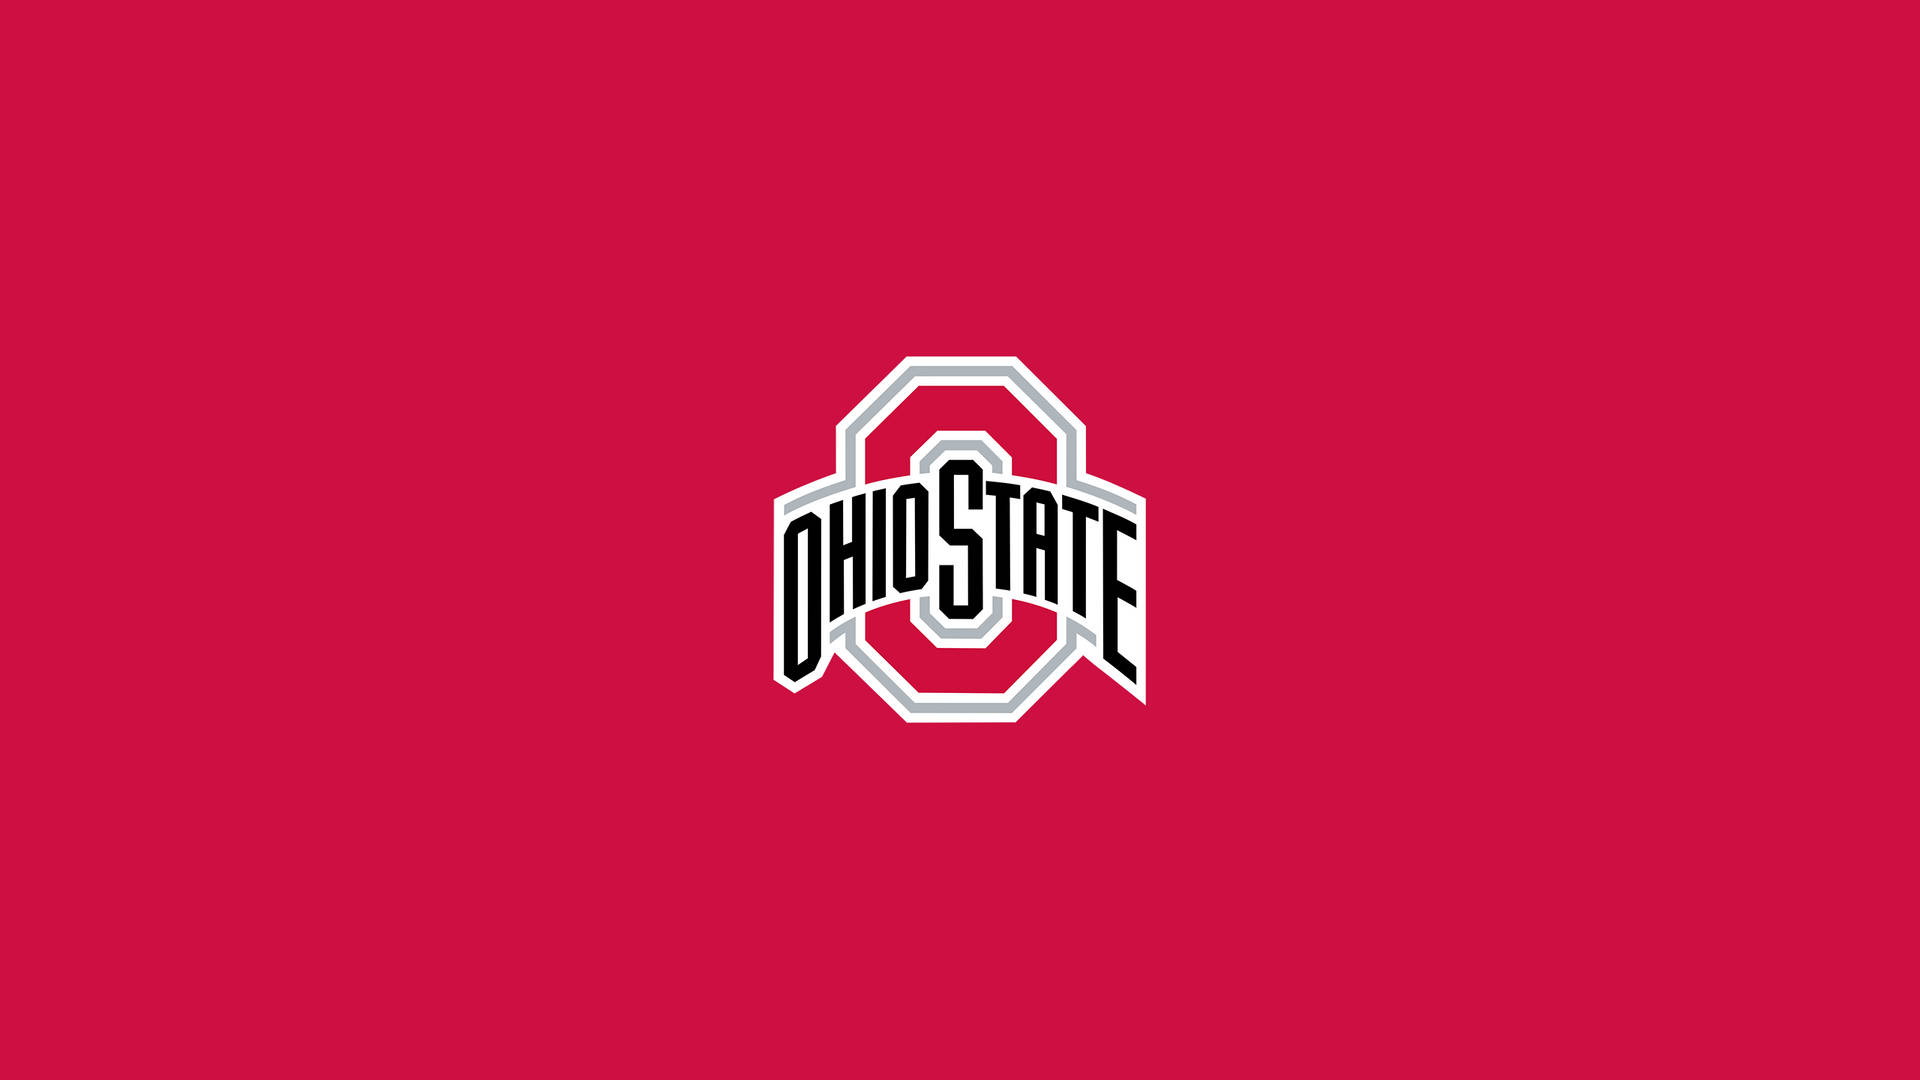 Ohio State University Plain Red Background